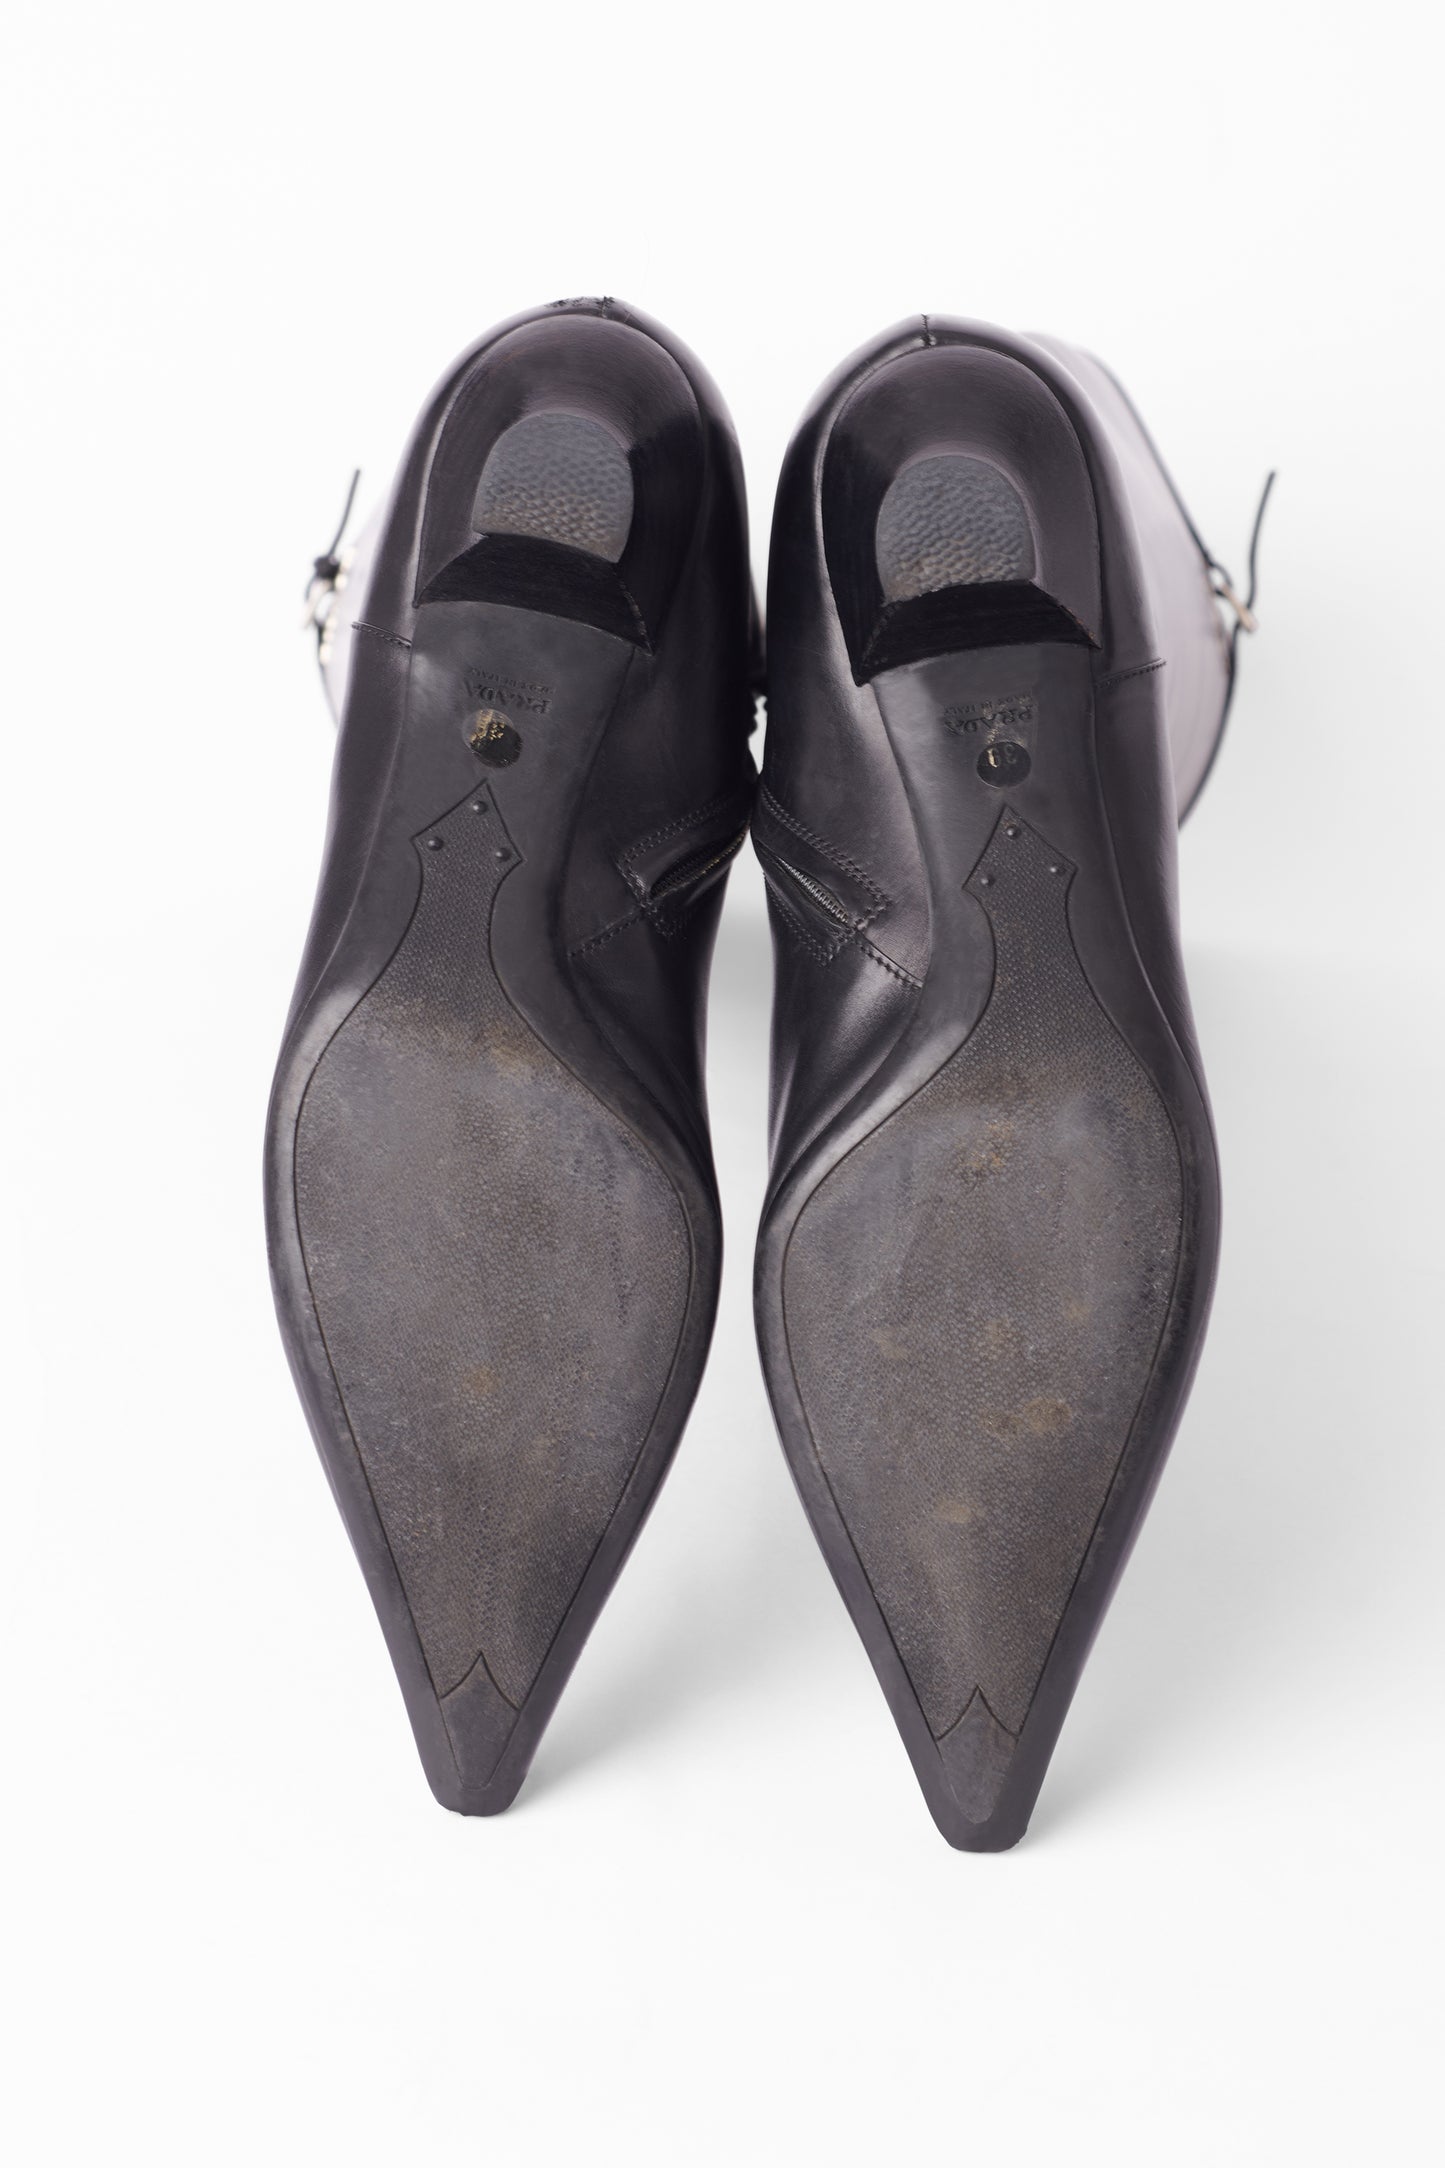 Vintage 2000’s Black Leather Kitten Heels Boots